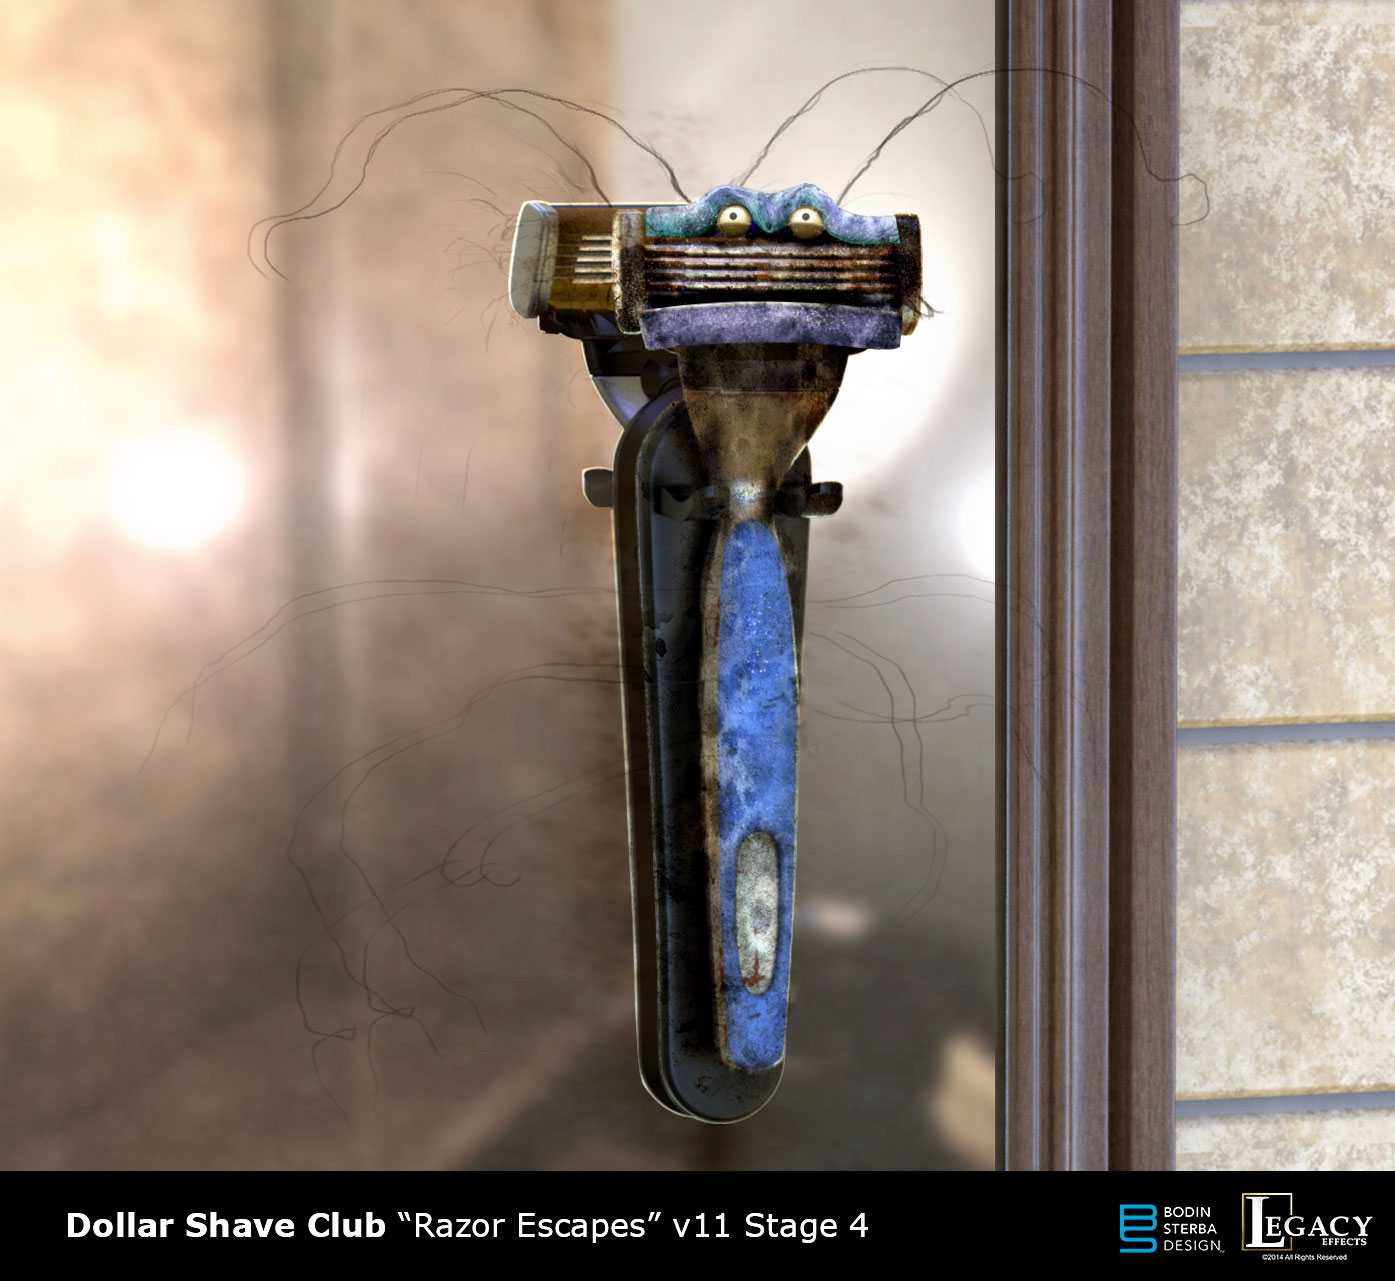 Dollar Shave Club "Razor Escapes" design